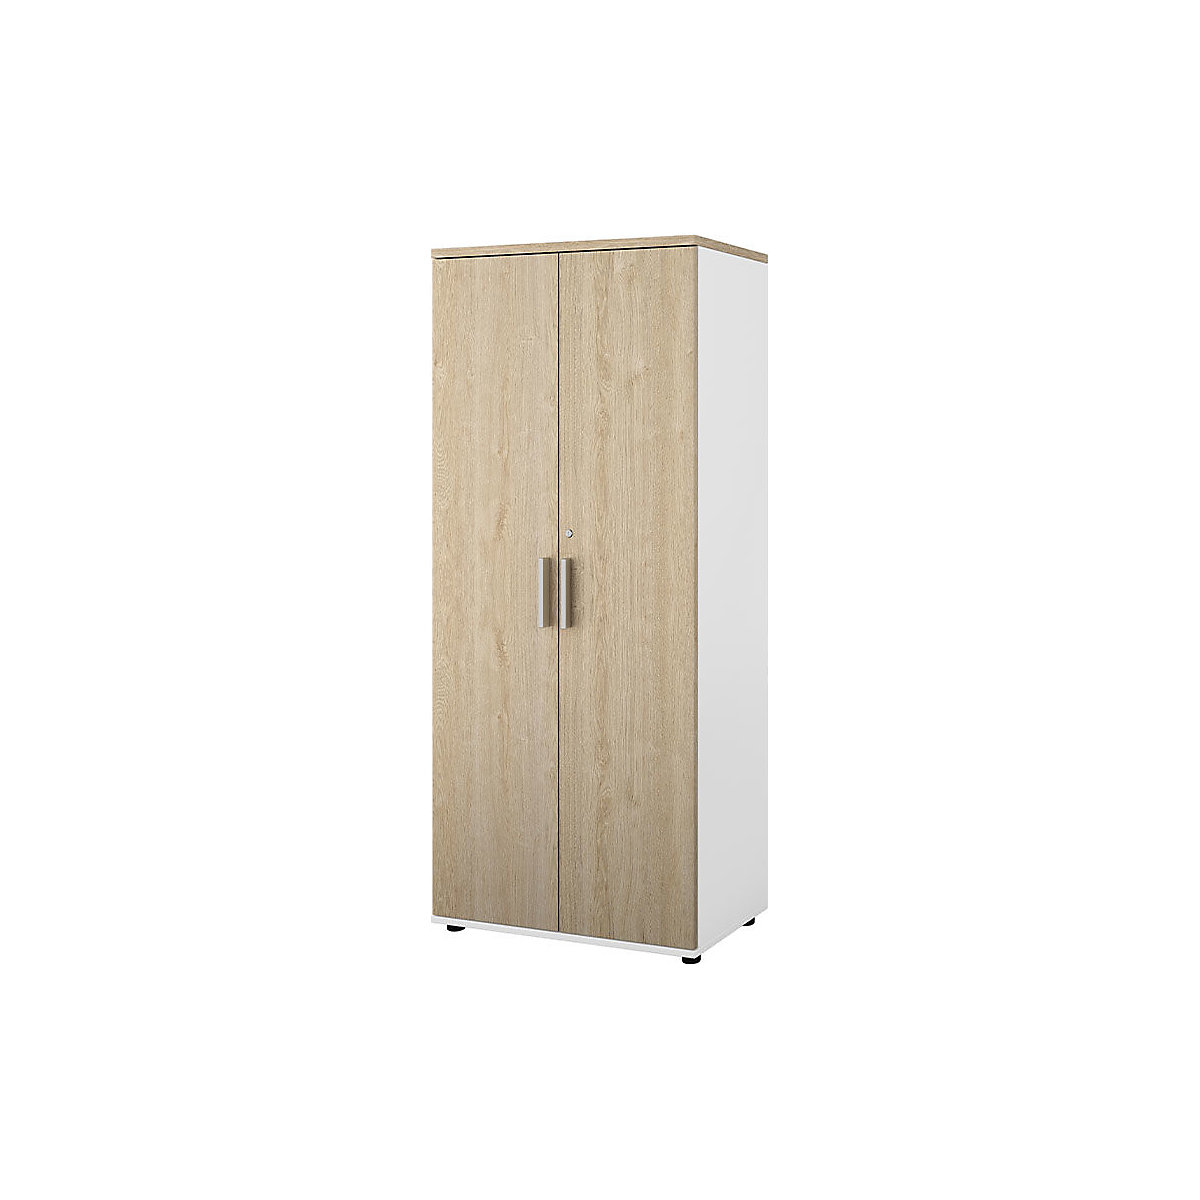 Portland cupboard, WxD 800 x 420 mm, H 1845 mm, door height 1770 mm, brushed white / oak-2